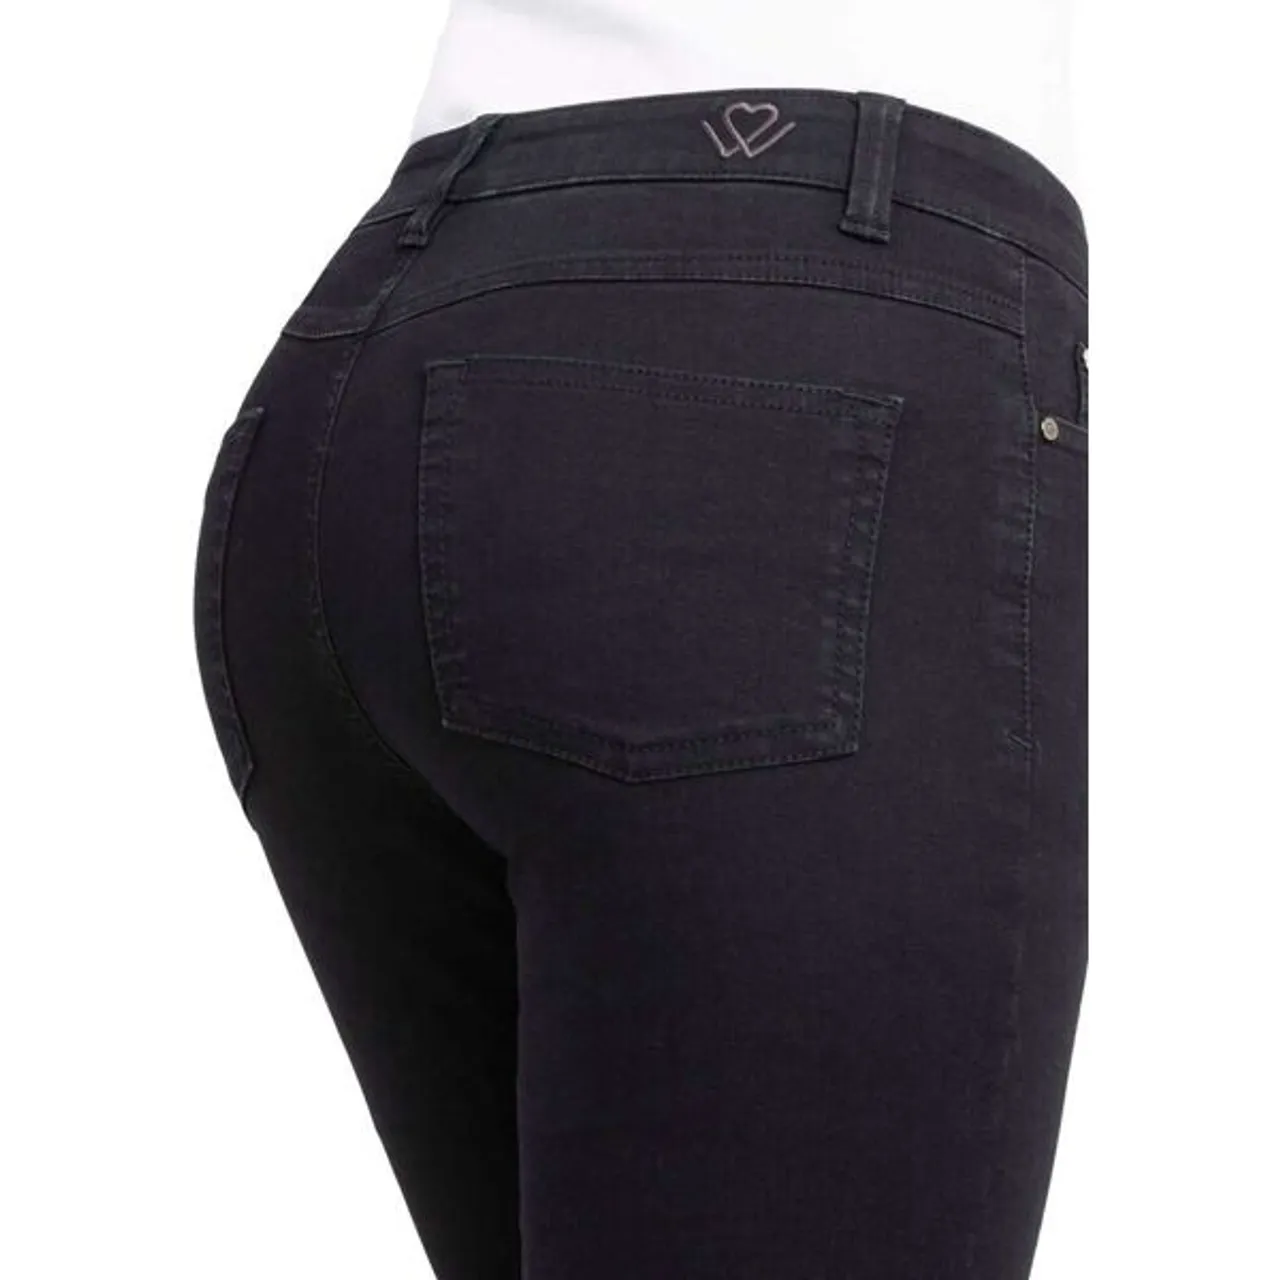 Skinny-fit-Jeans WONDERJEANS "Skinny-WS76-80" Gr. 34, Länge 32, schwarz (black denim) Damen Jeans Röhrenjeans Schmaler Skinny-Fit in hochelastischer Q...